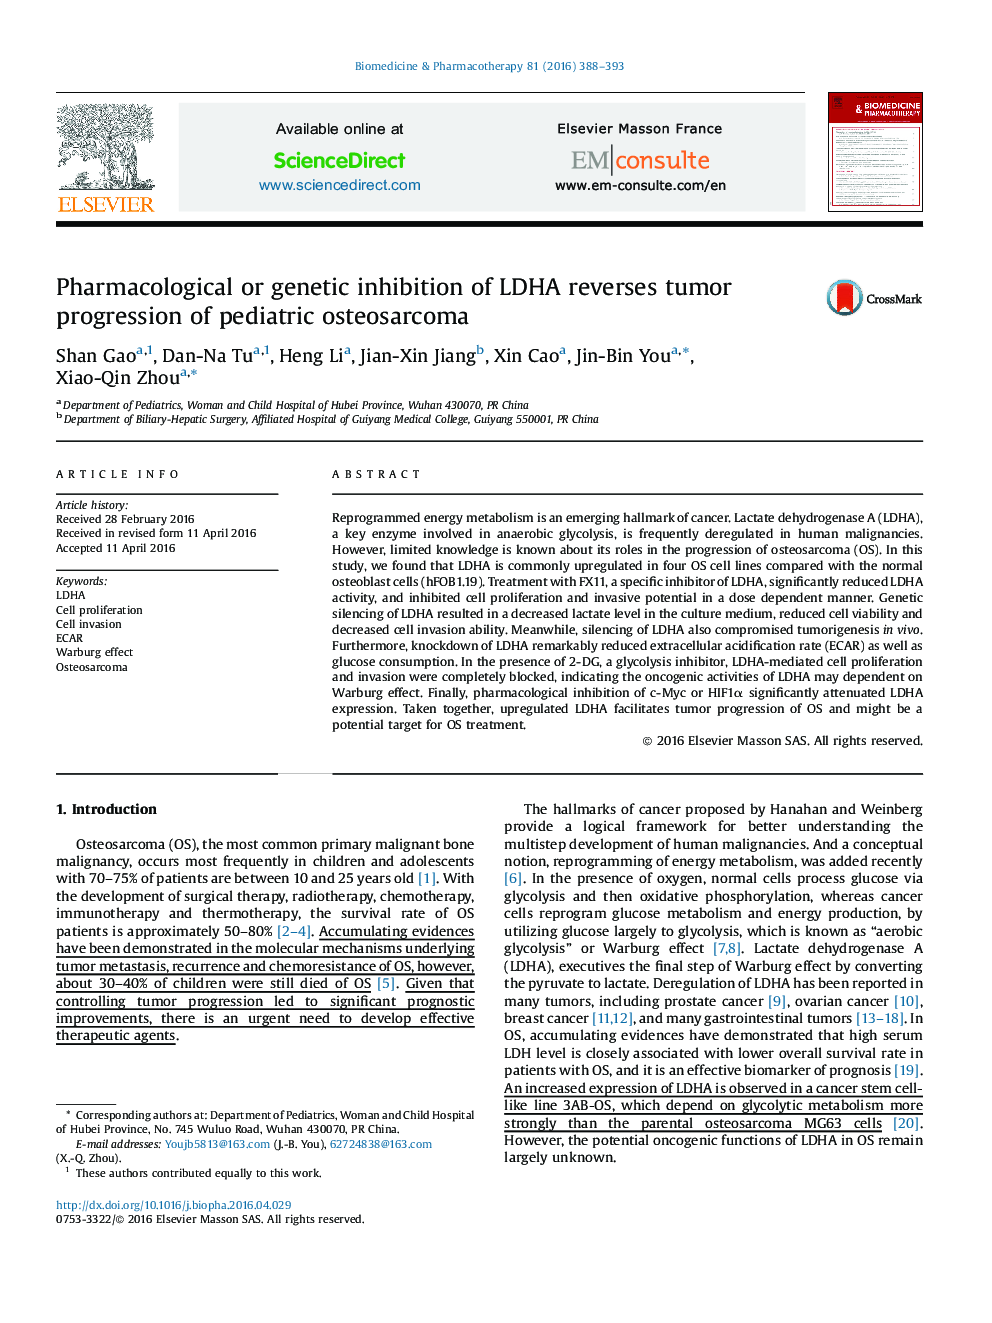 Pharmacological or genetic inhibition of LDHA reverses tumor progression of pediatric osteosarcoma